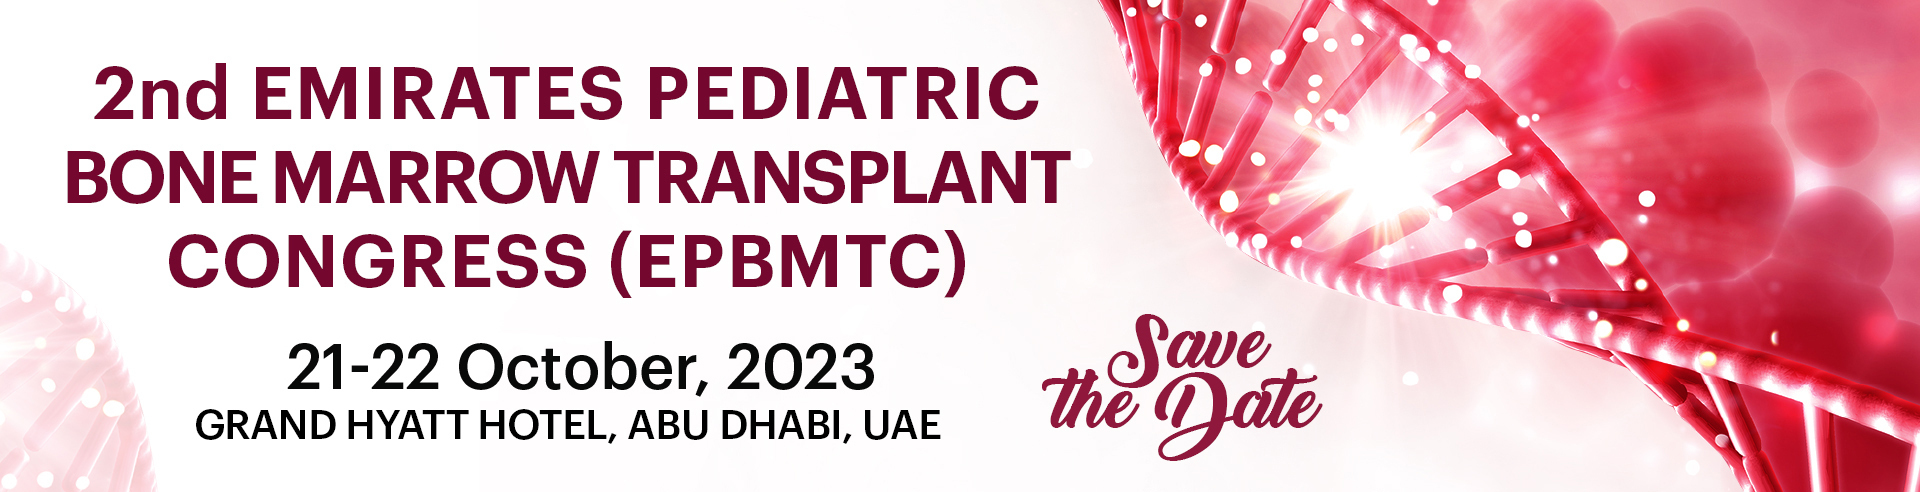 2nd Emirates Pediatric Bone Marrow Transplant Congress, Abu Dhabi, United Arab Emirates